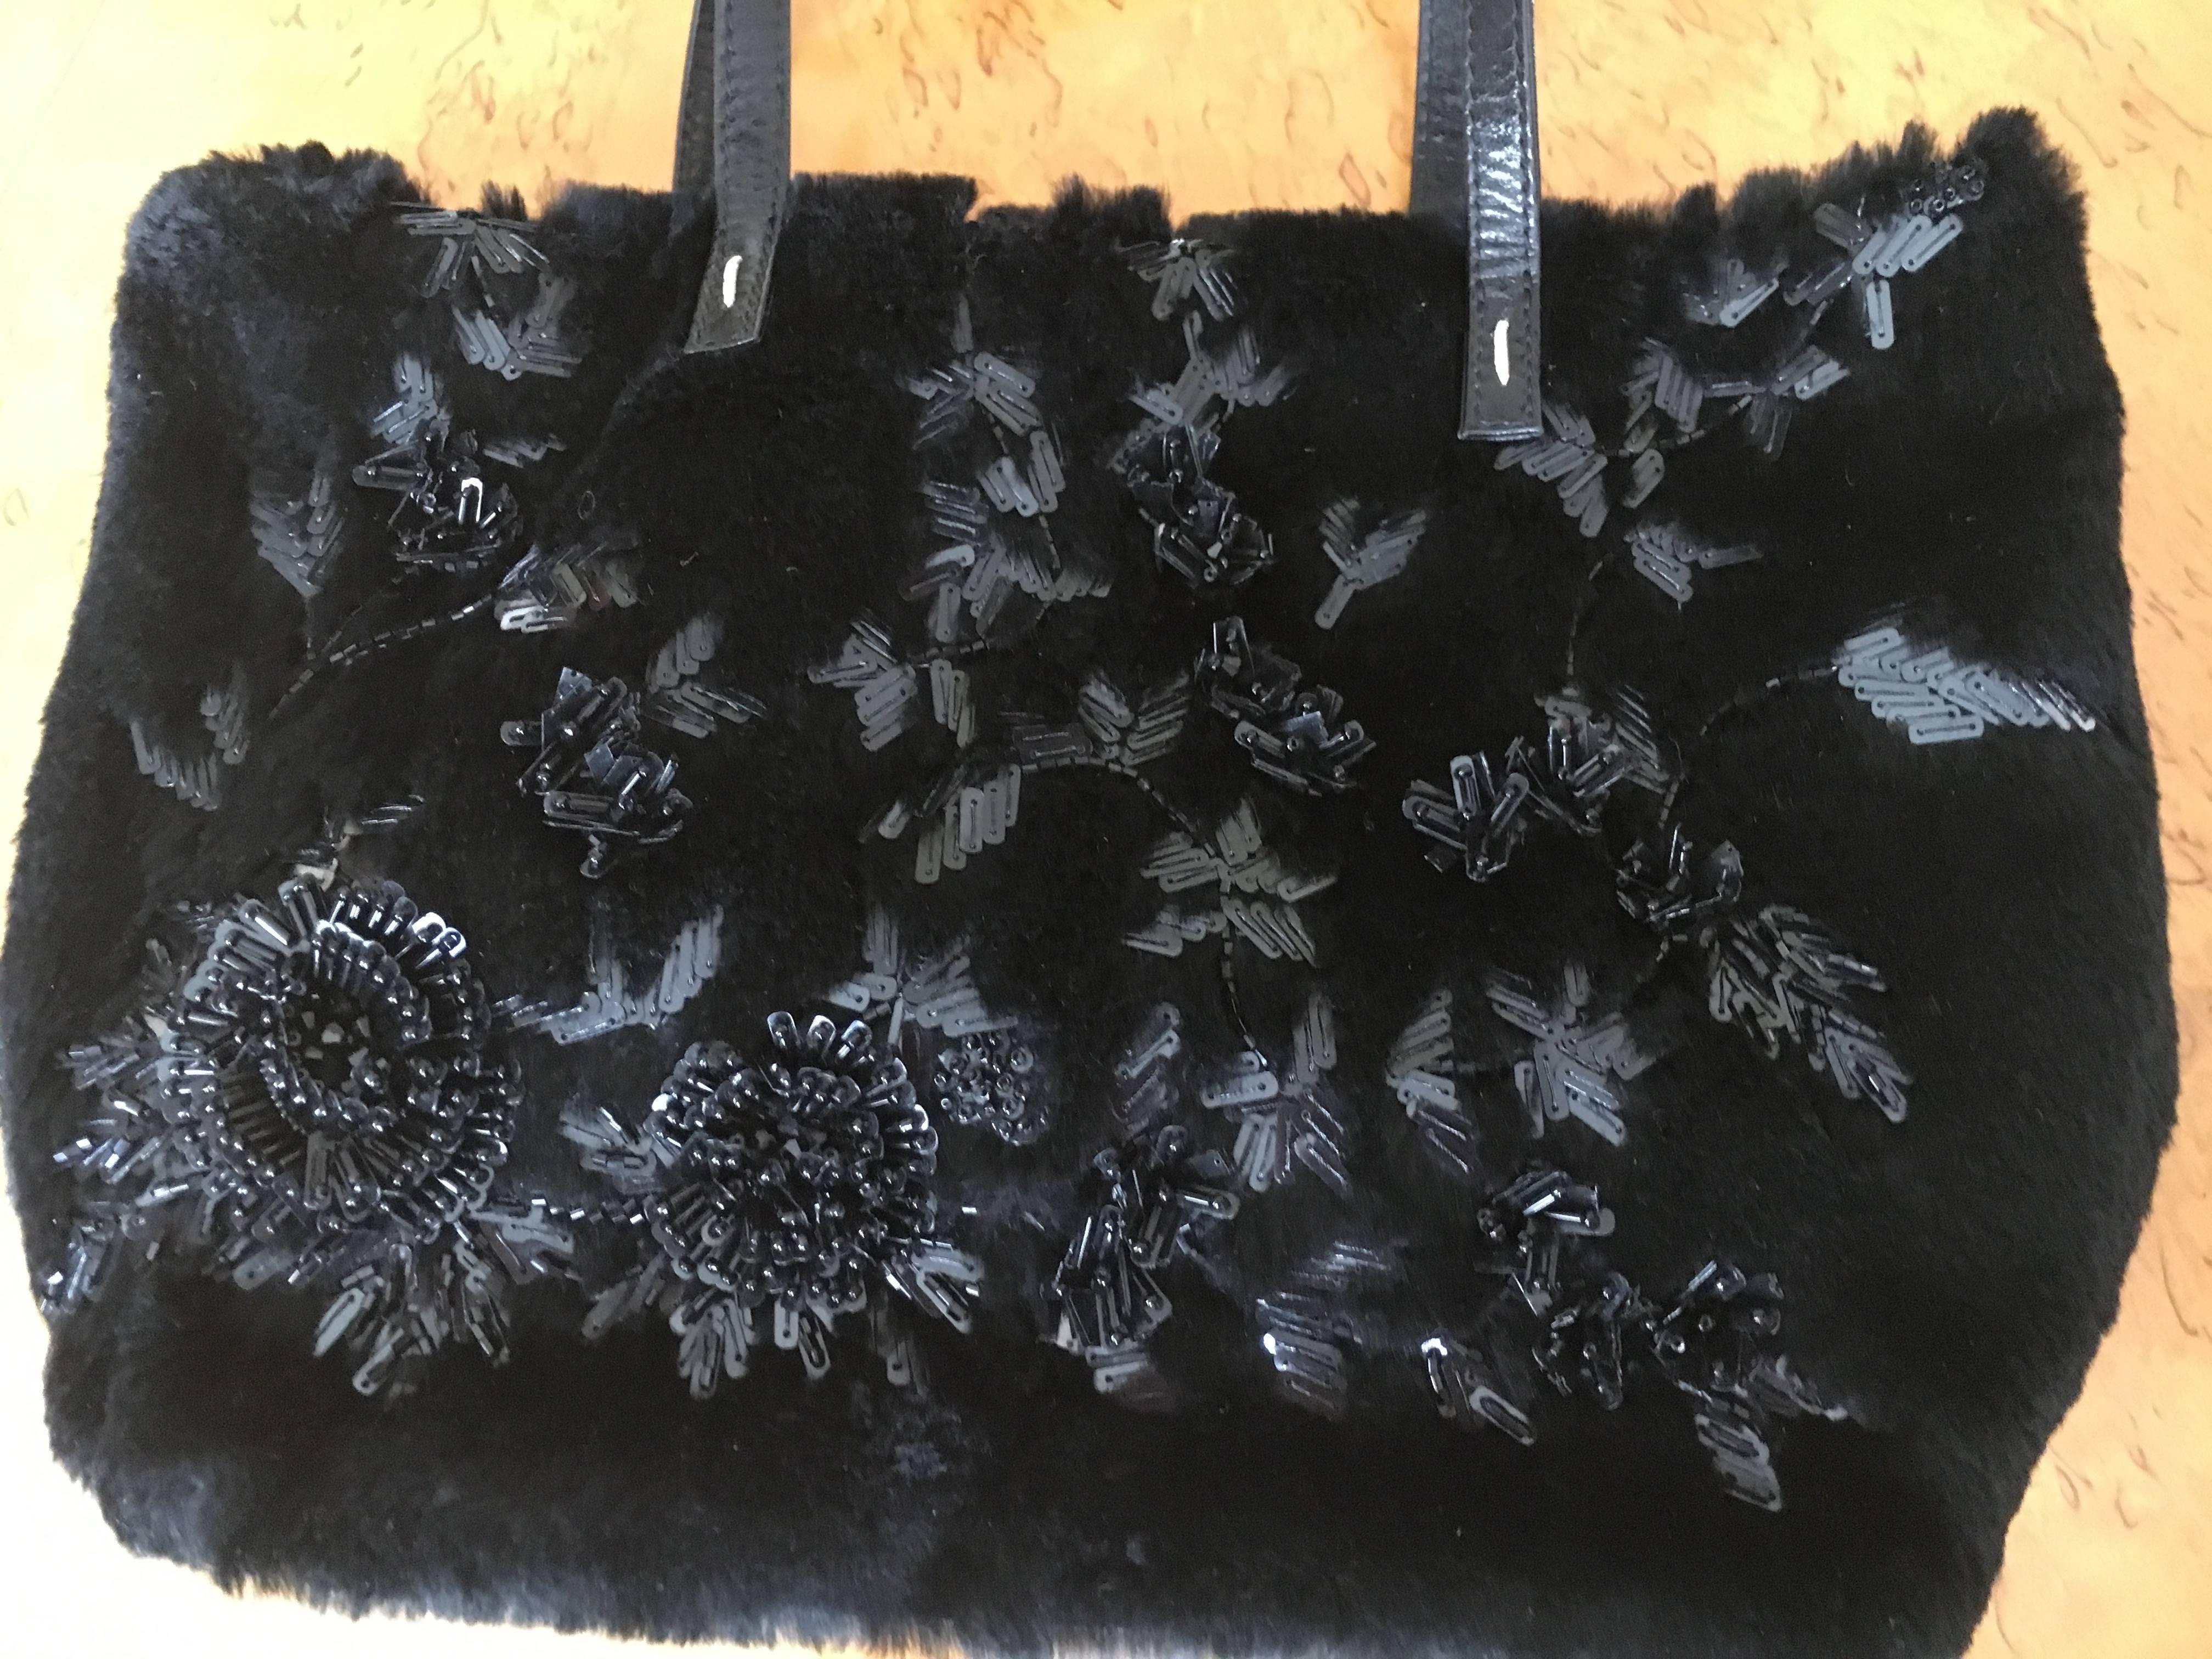 Valentino Garavani Sheared Black Mink Embellished Handbag.
This is exquisite, but hard to photograph.
11